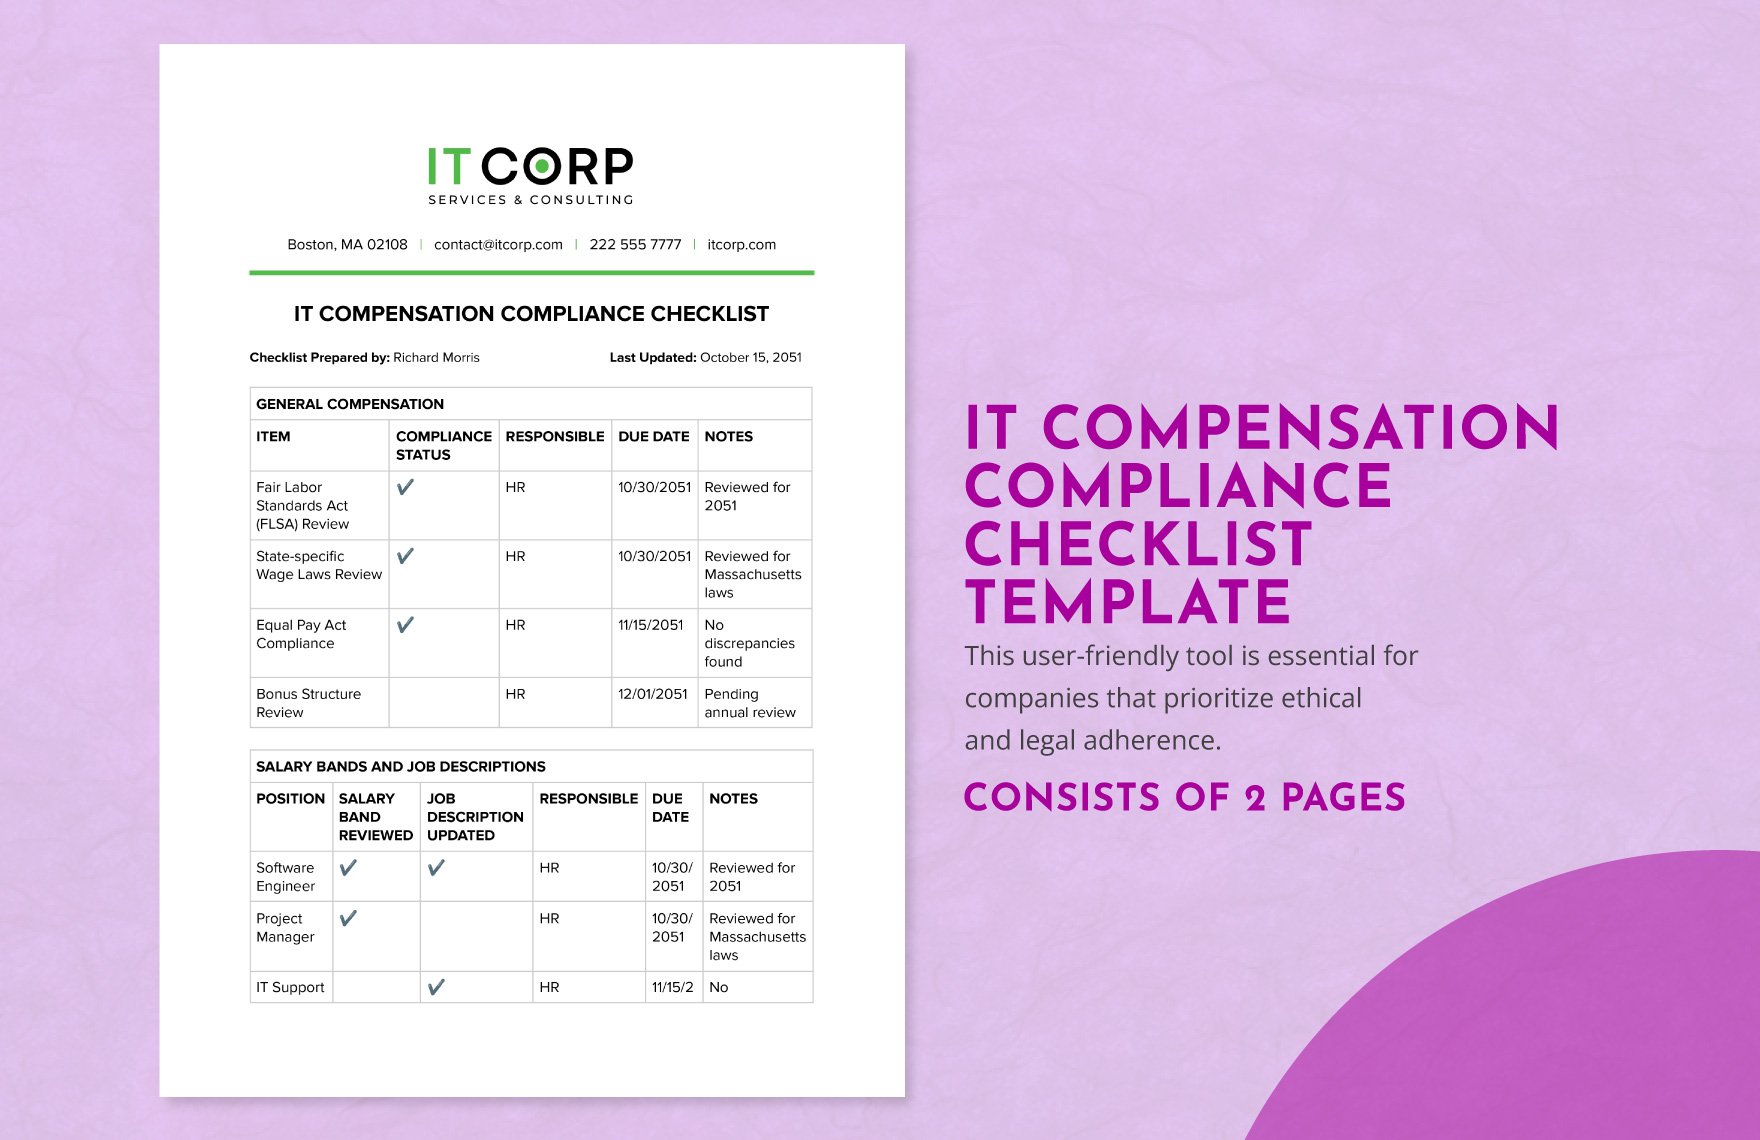 IT Compensation Compliance Checklist Template